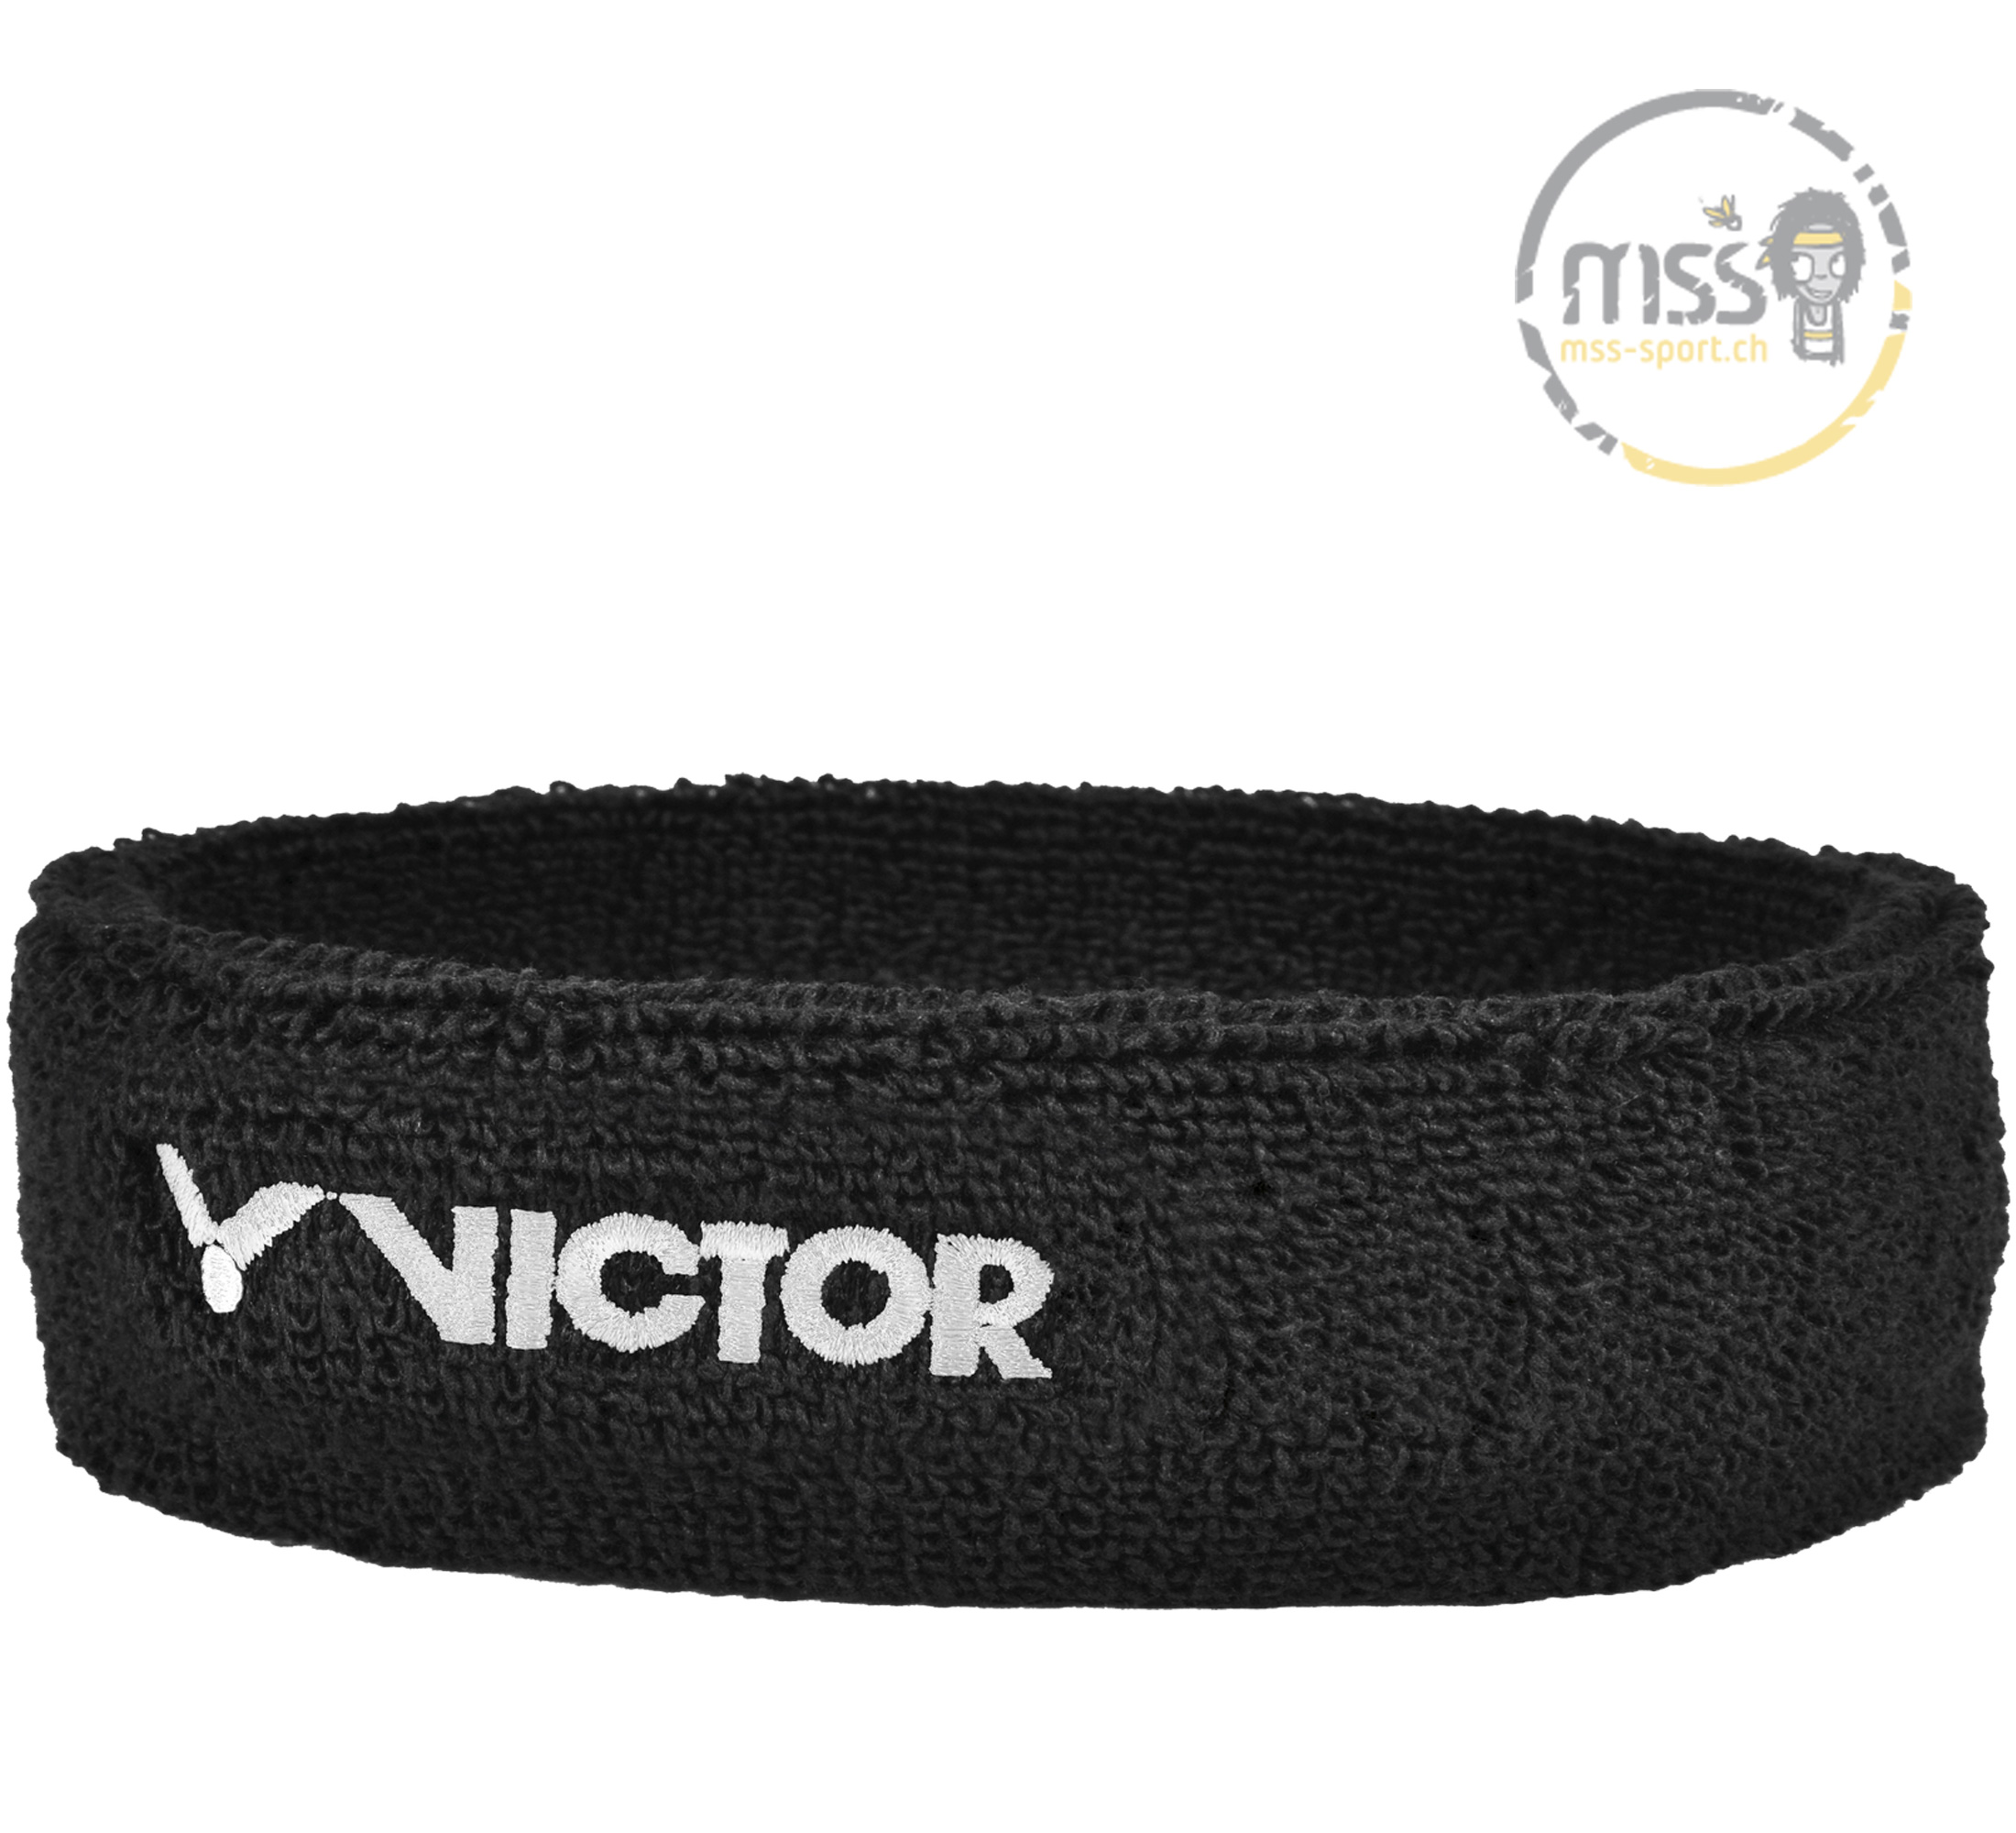 Victor Headband black